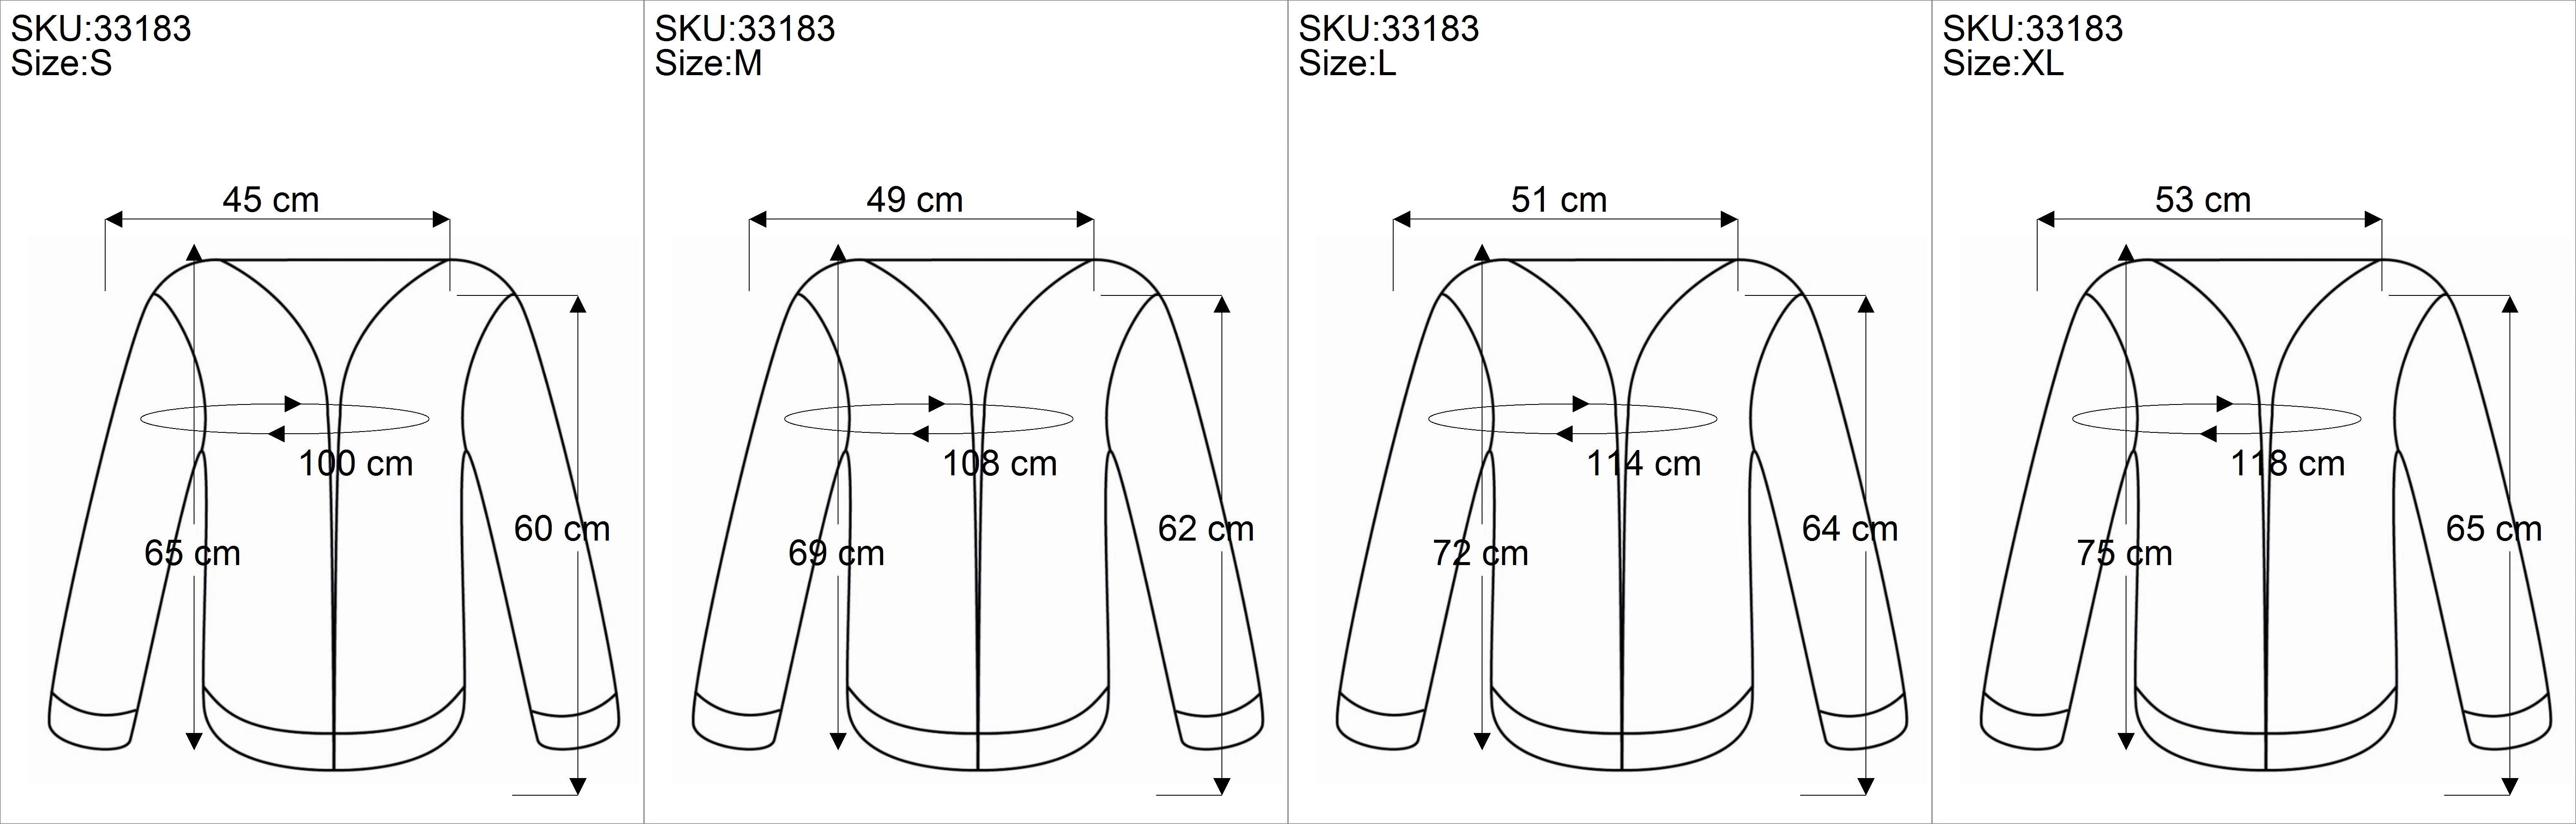 Guru-Shop Strickjacke petrol Mandala Jacke, Goa Bekleidung Sweatshirt Jacke alternative - mit